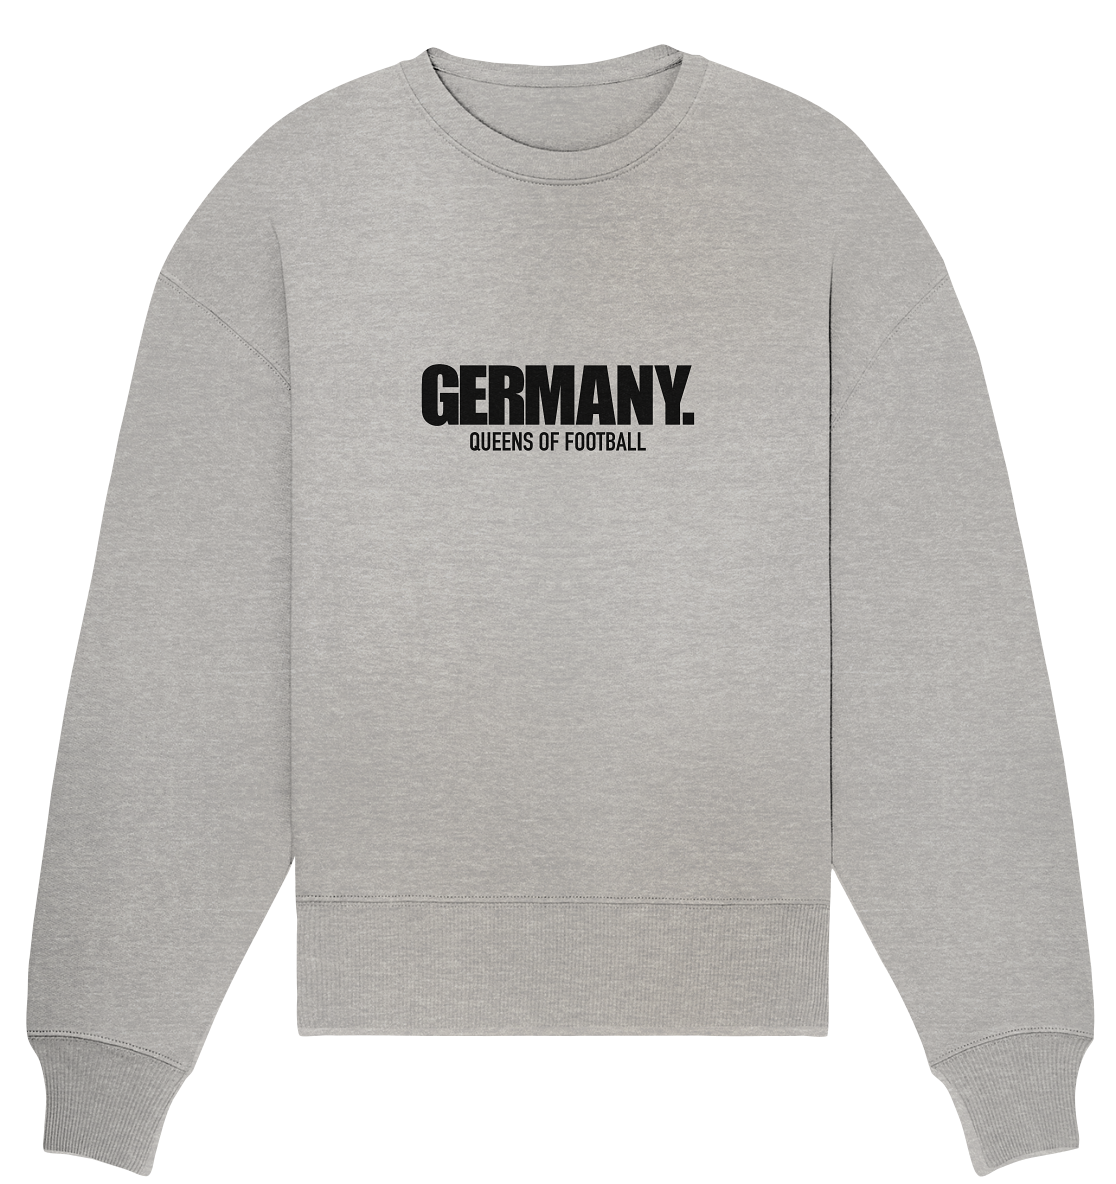 N.O.S.W. BLOCK Fanblock Shirt "GERMANY. QUEENS OF FOOTBALL" Girls Organic T-Shirt heather grau